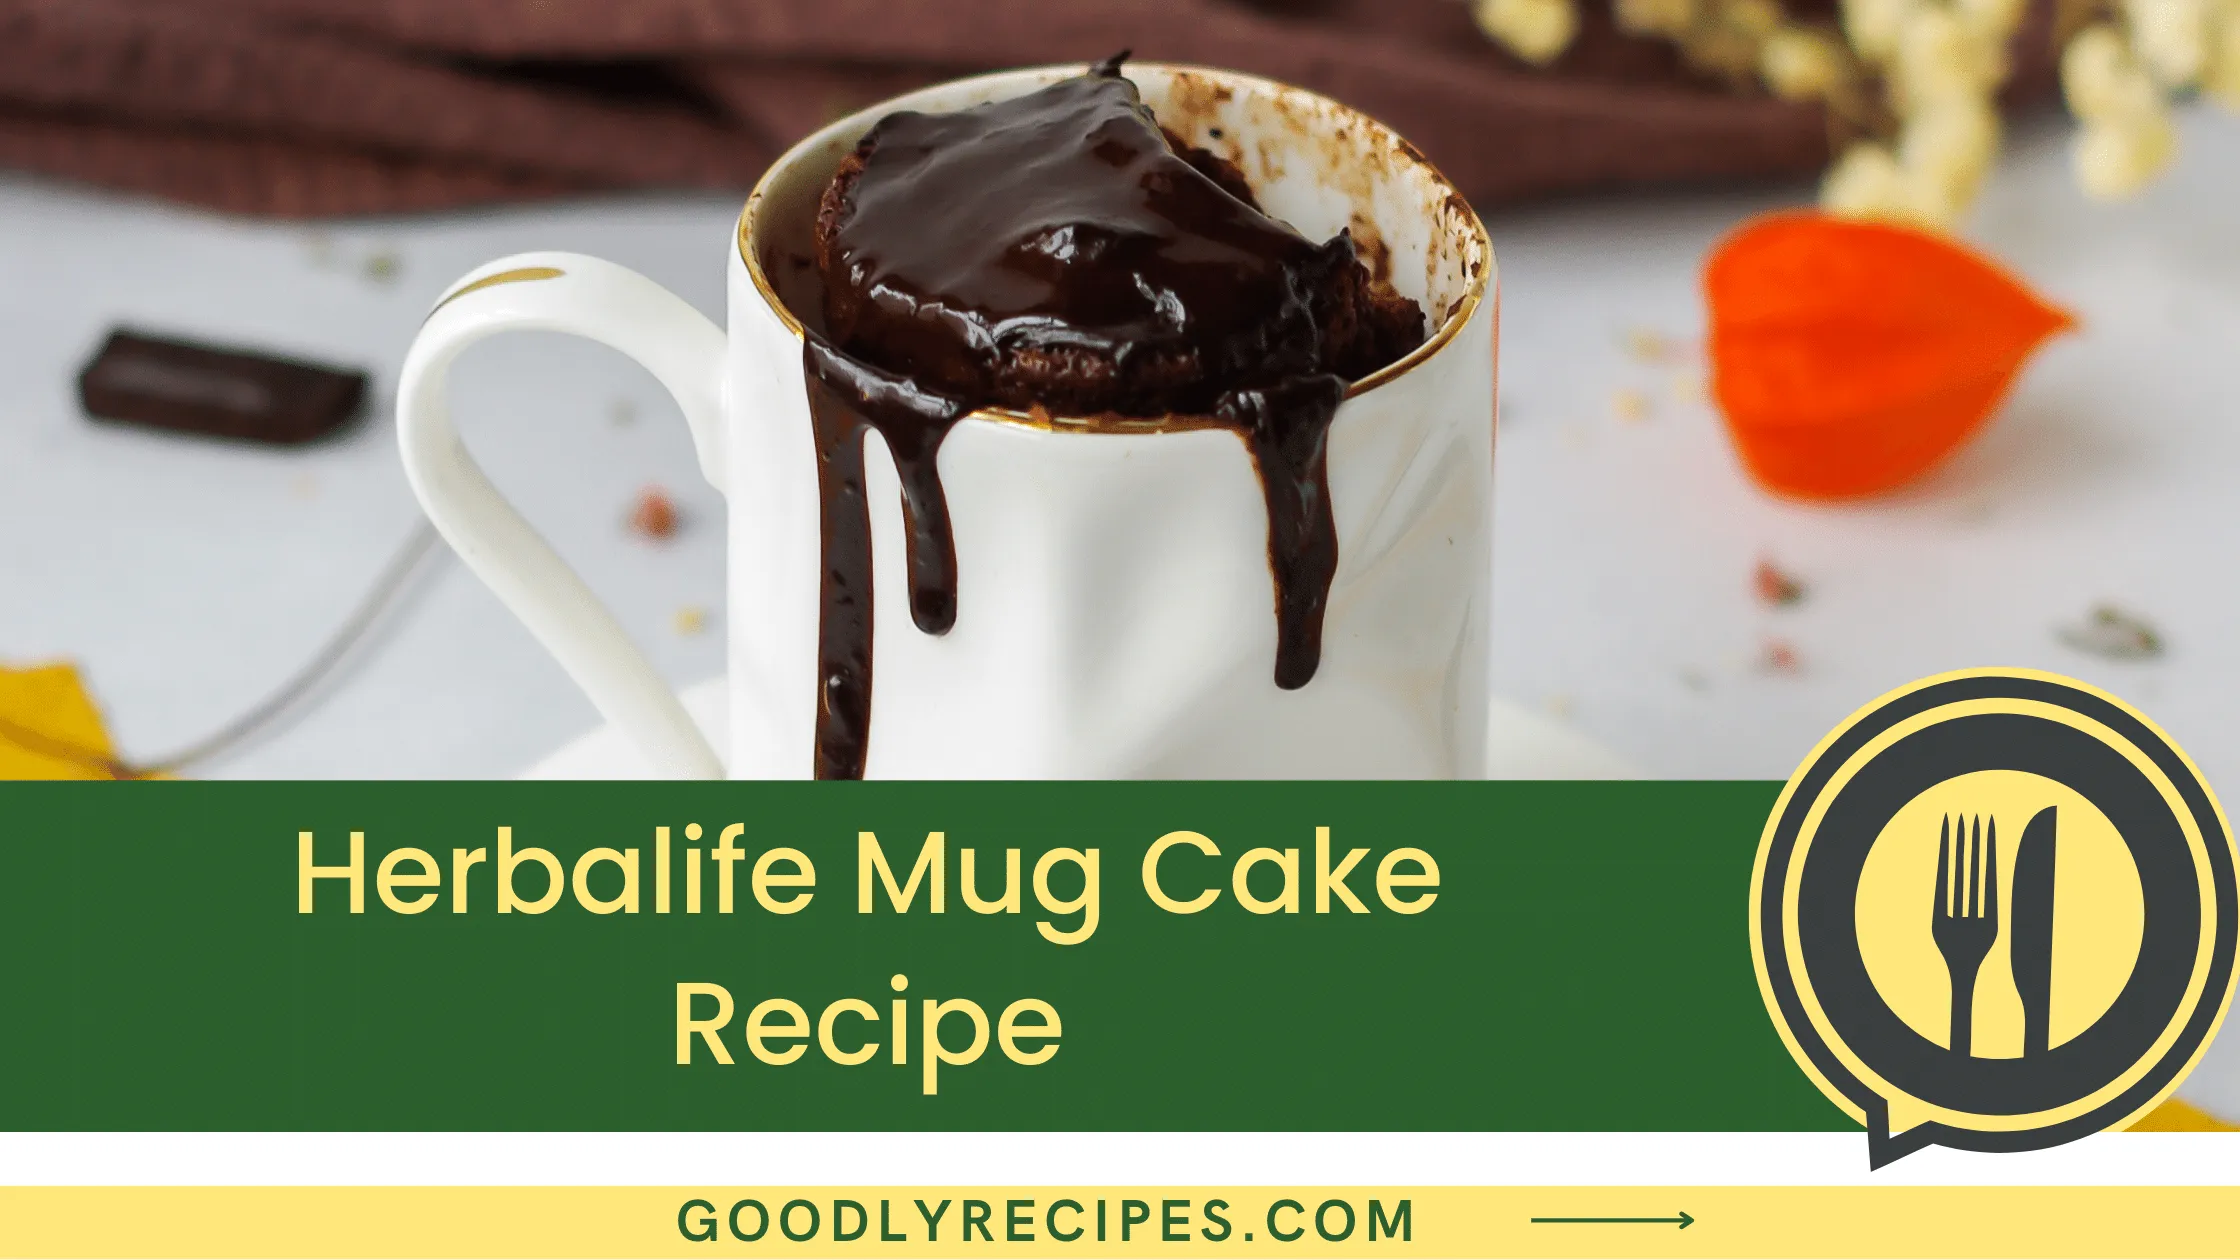 What is Herbalife Mug Cake?